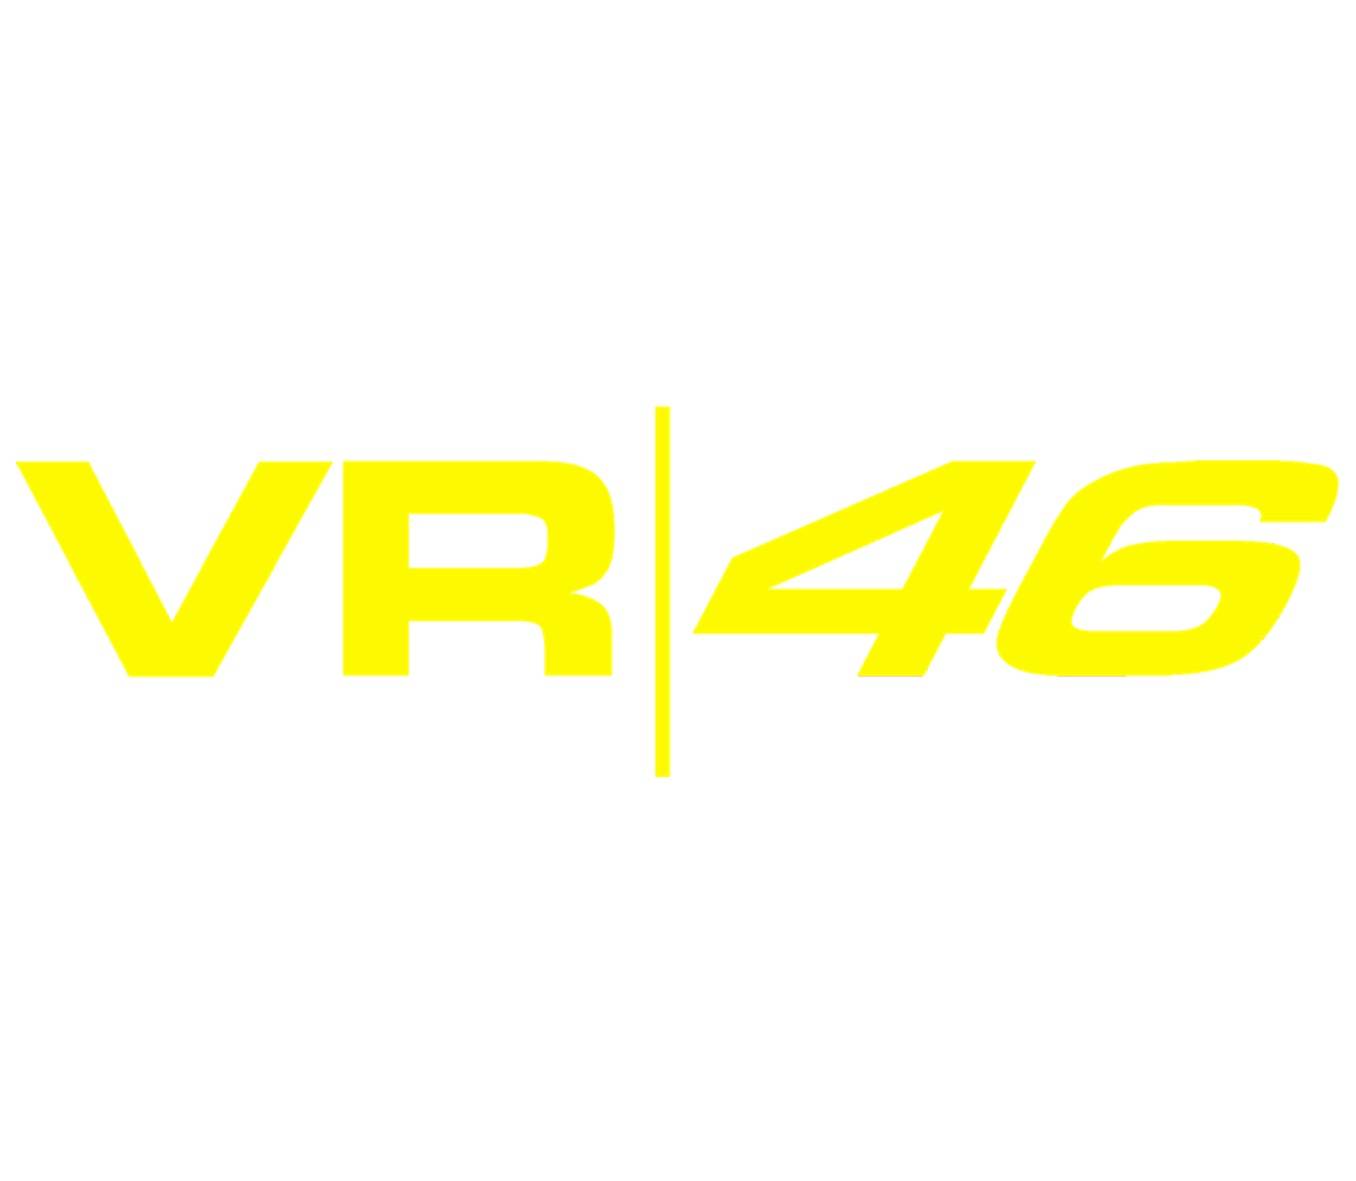 VR 46